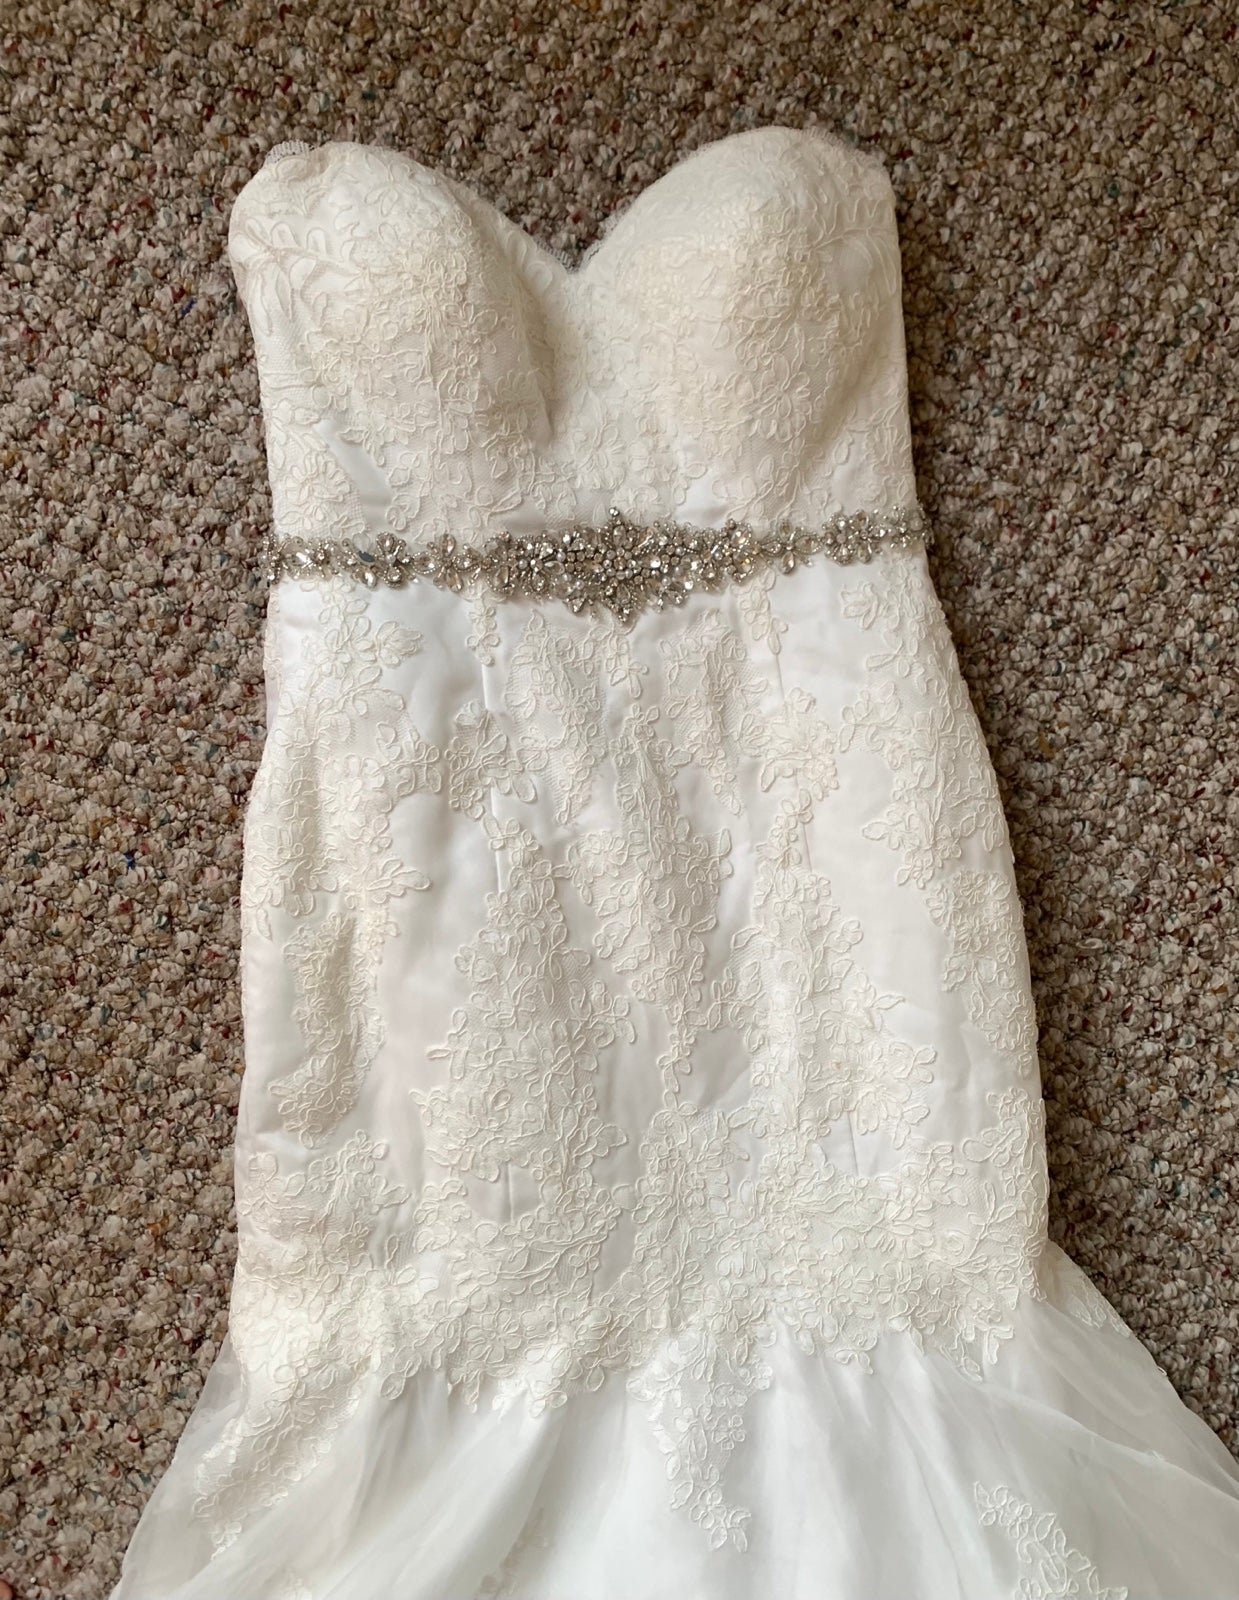 reasonable price soft white lace strapless trumpet wedding dress 4 PETITE iA9tTAZ9P hot sale